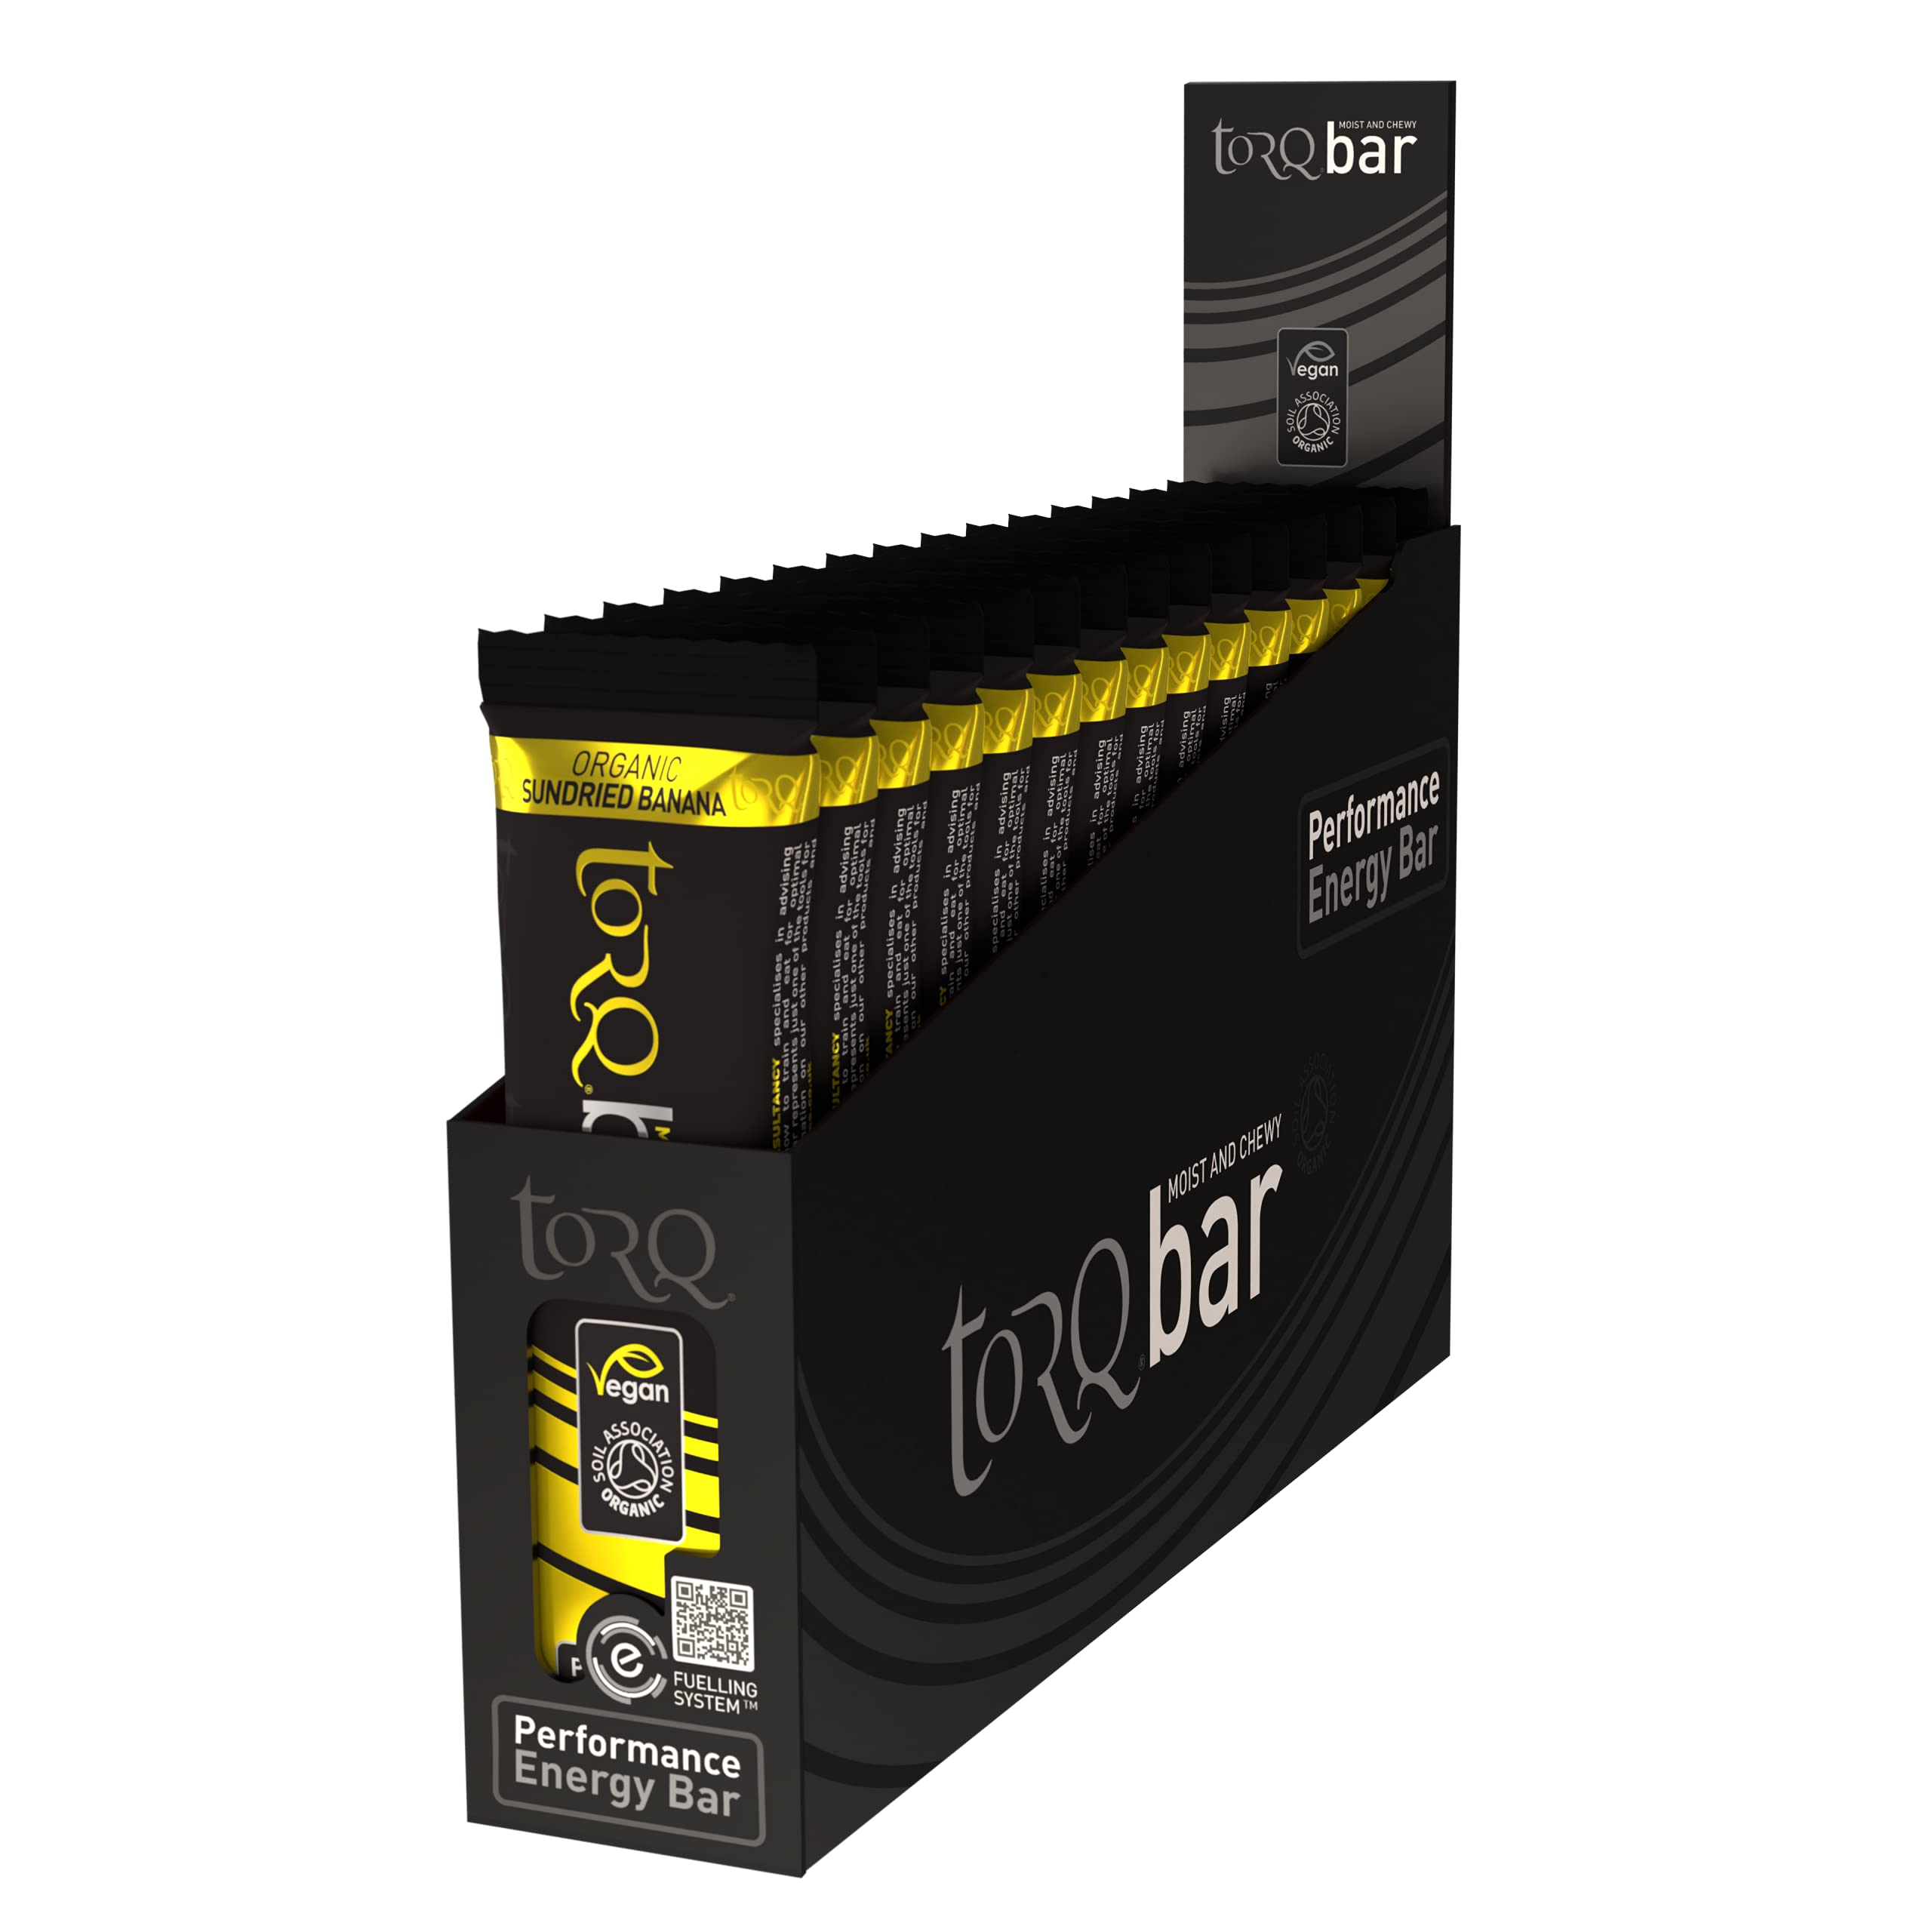 TORQ Bar Box of 15